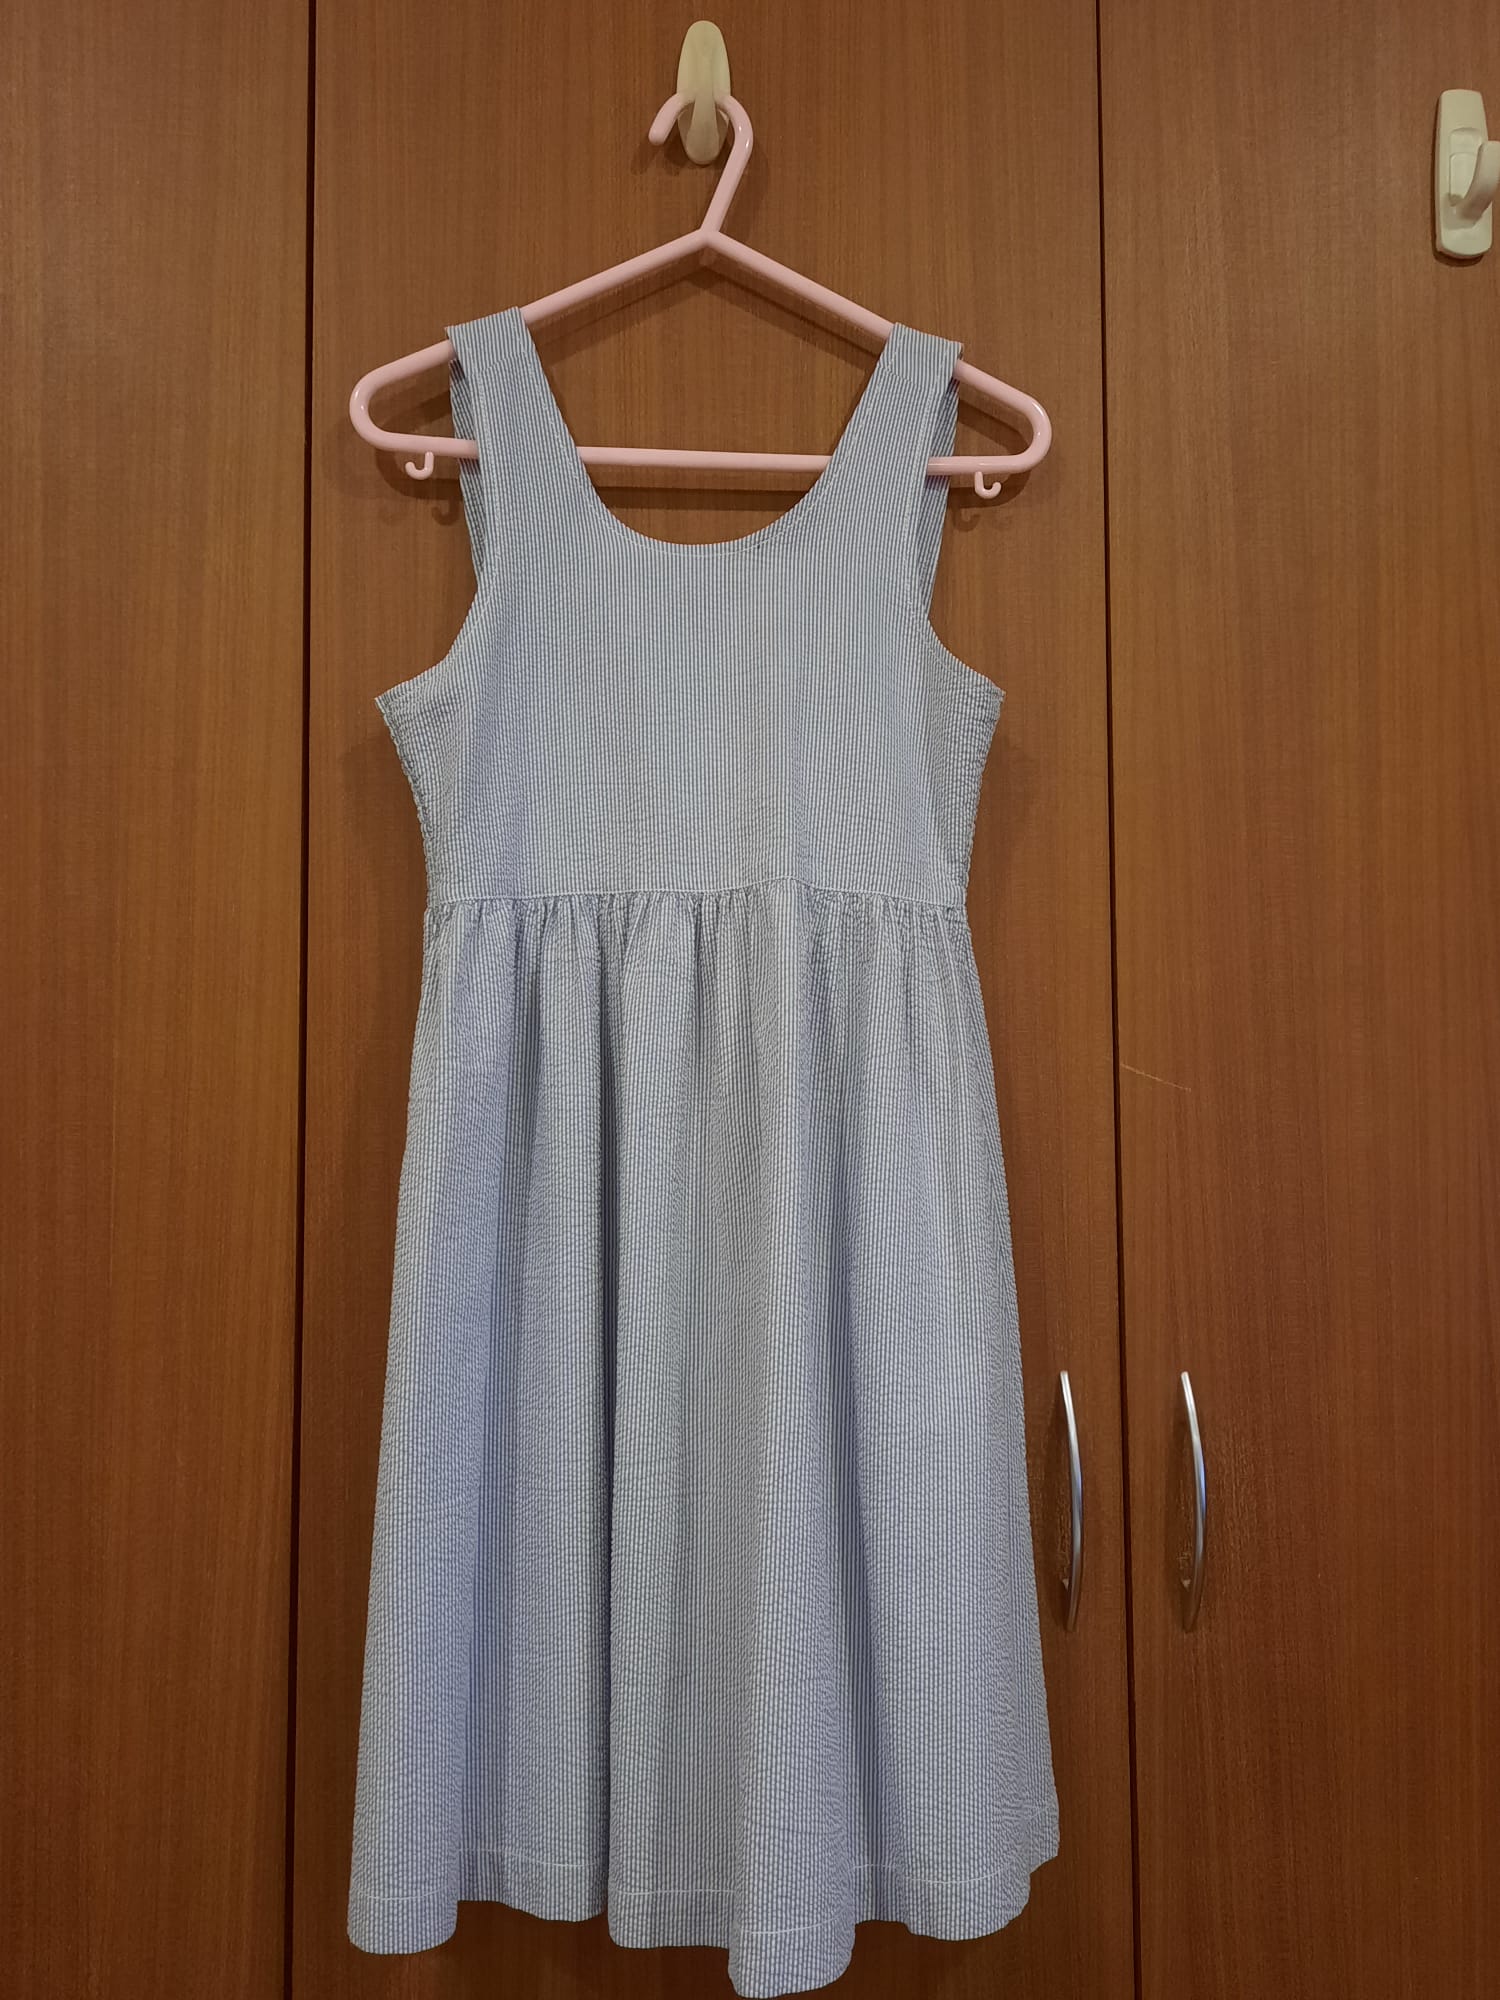 Blue & White Striped sleeveless dress 1.jpeg